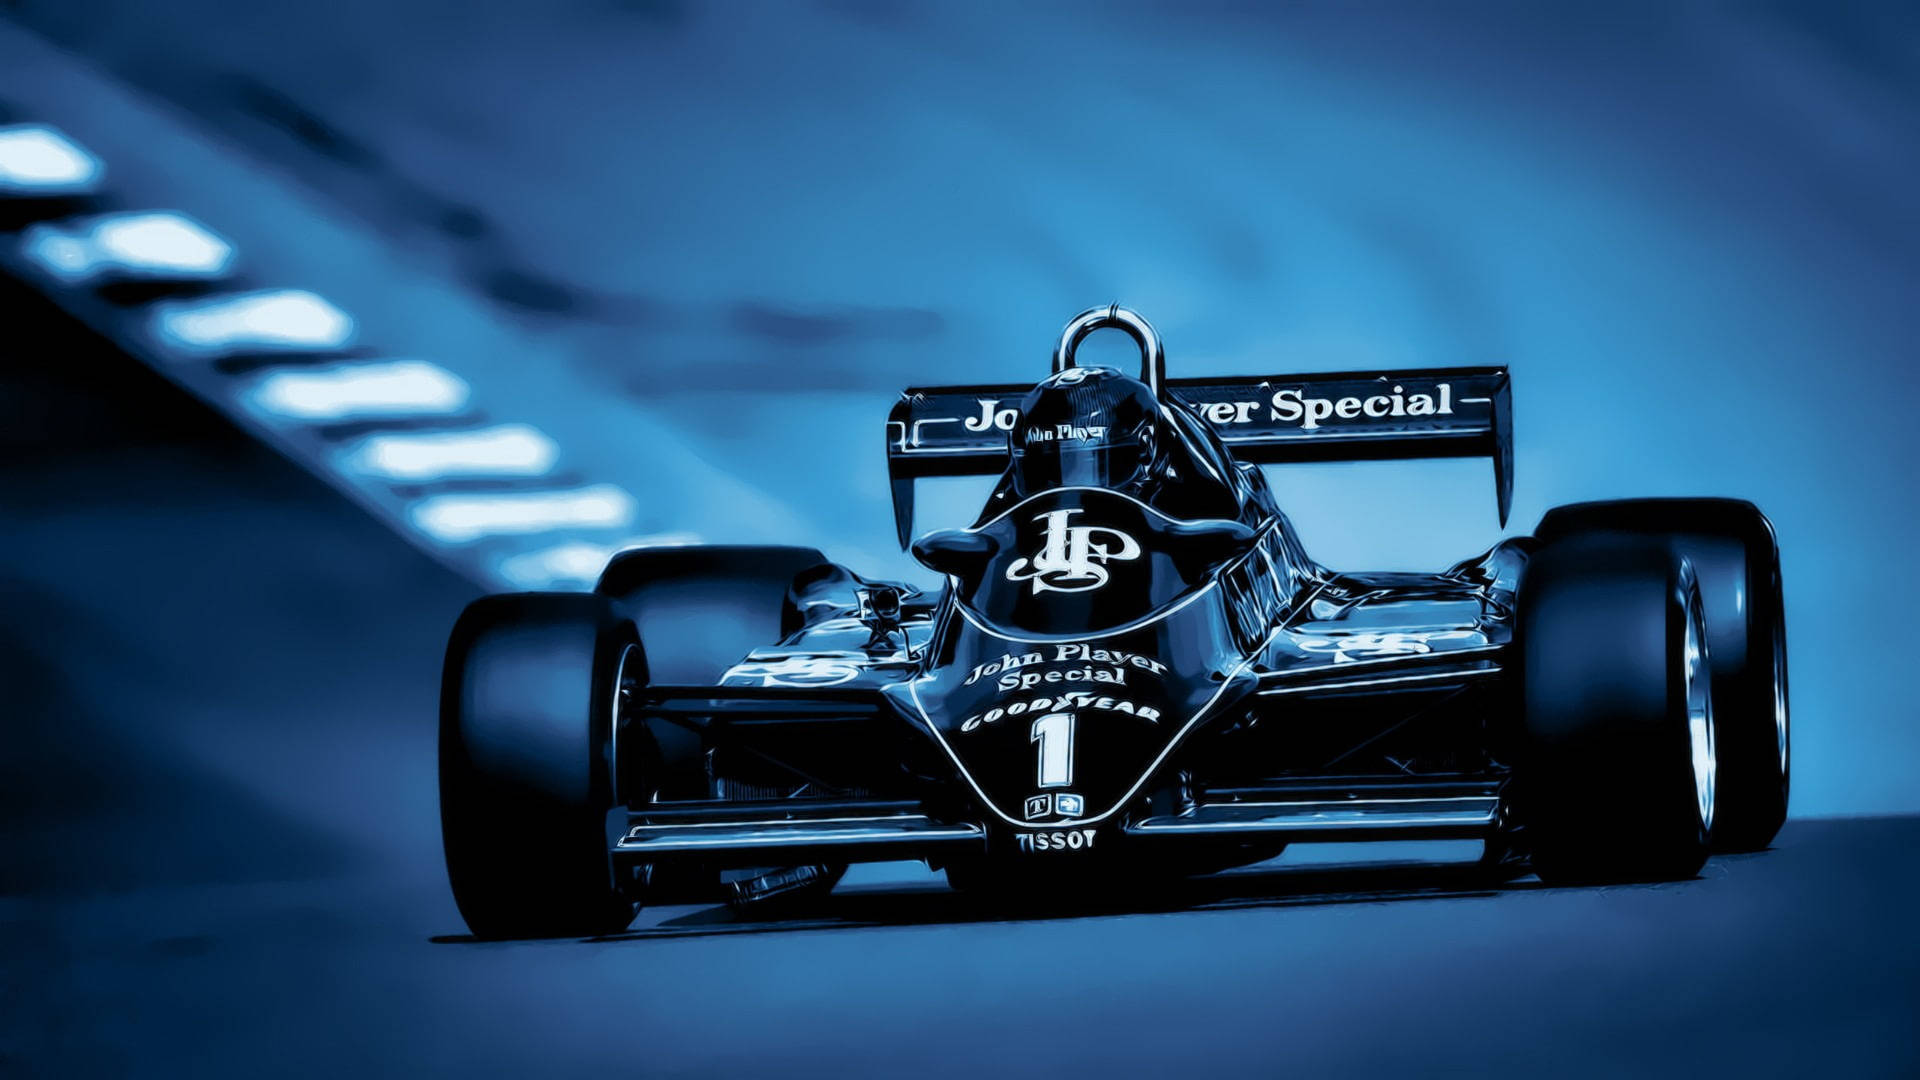 F1 Racing Car In Blue Aesthetic Wallpaper